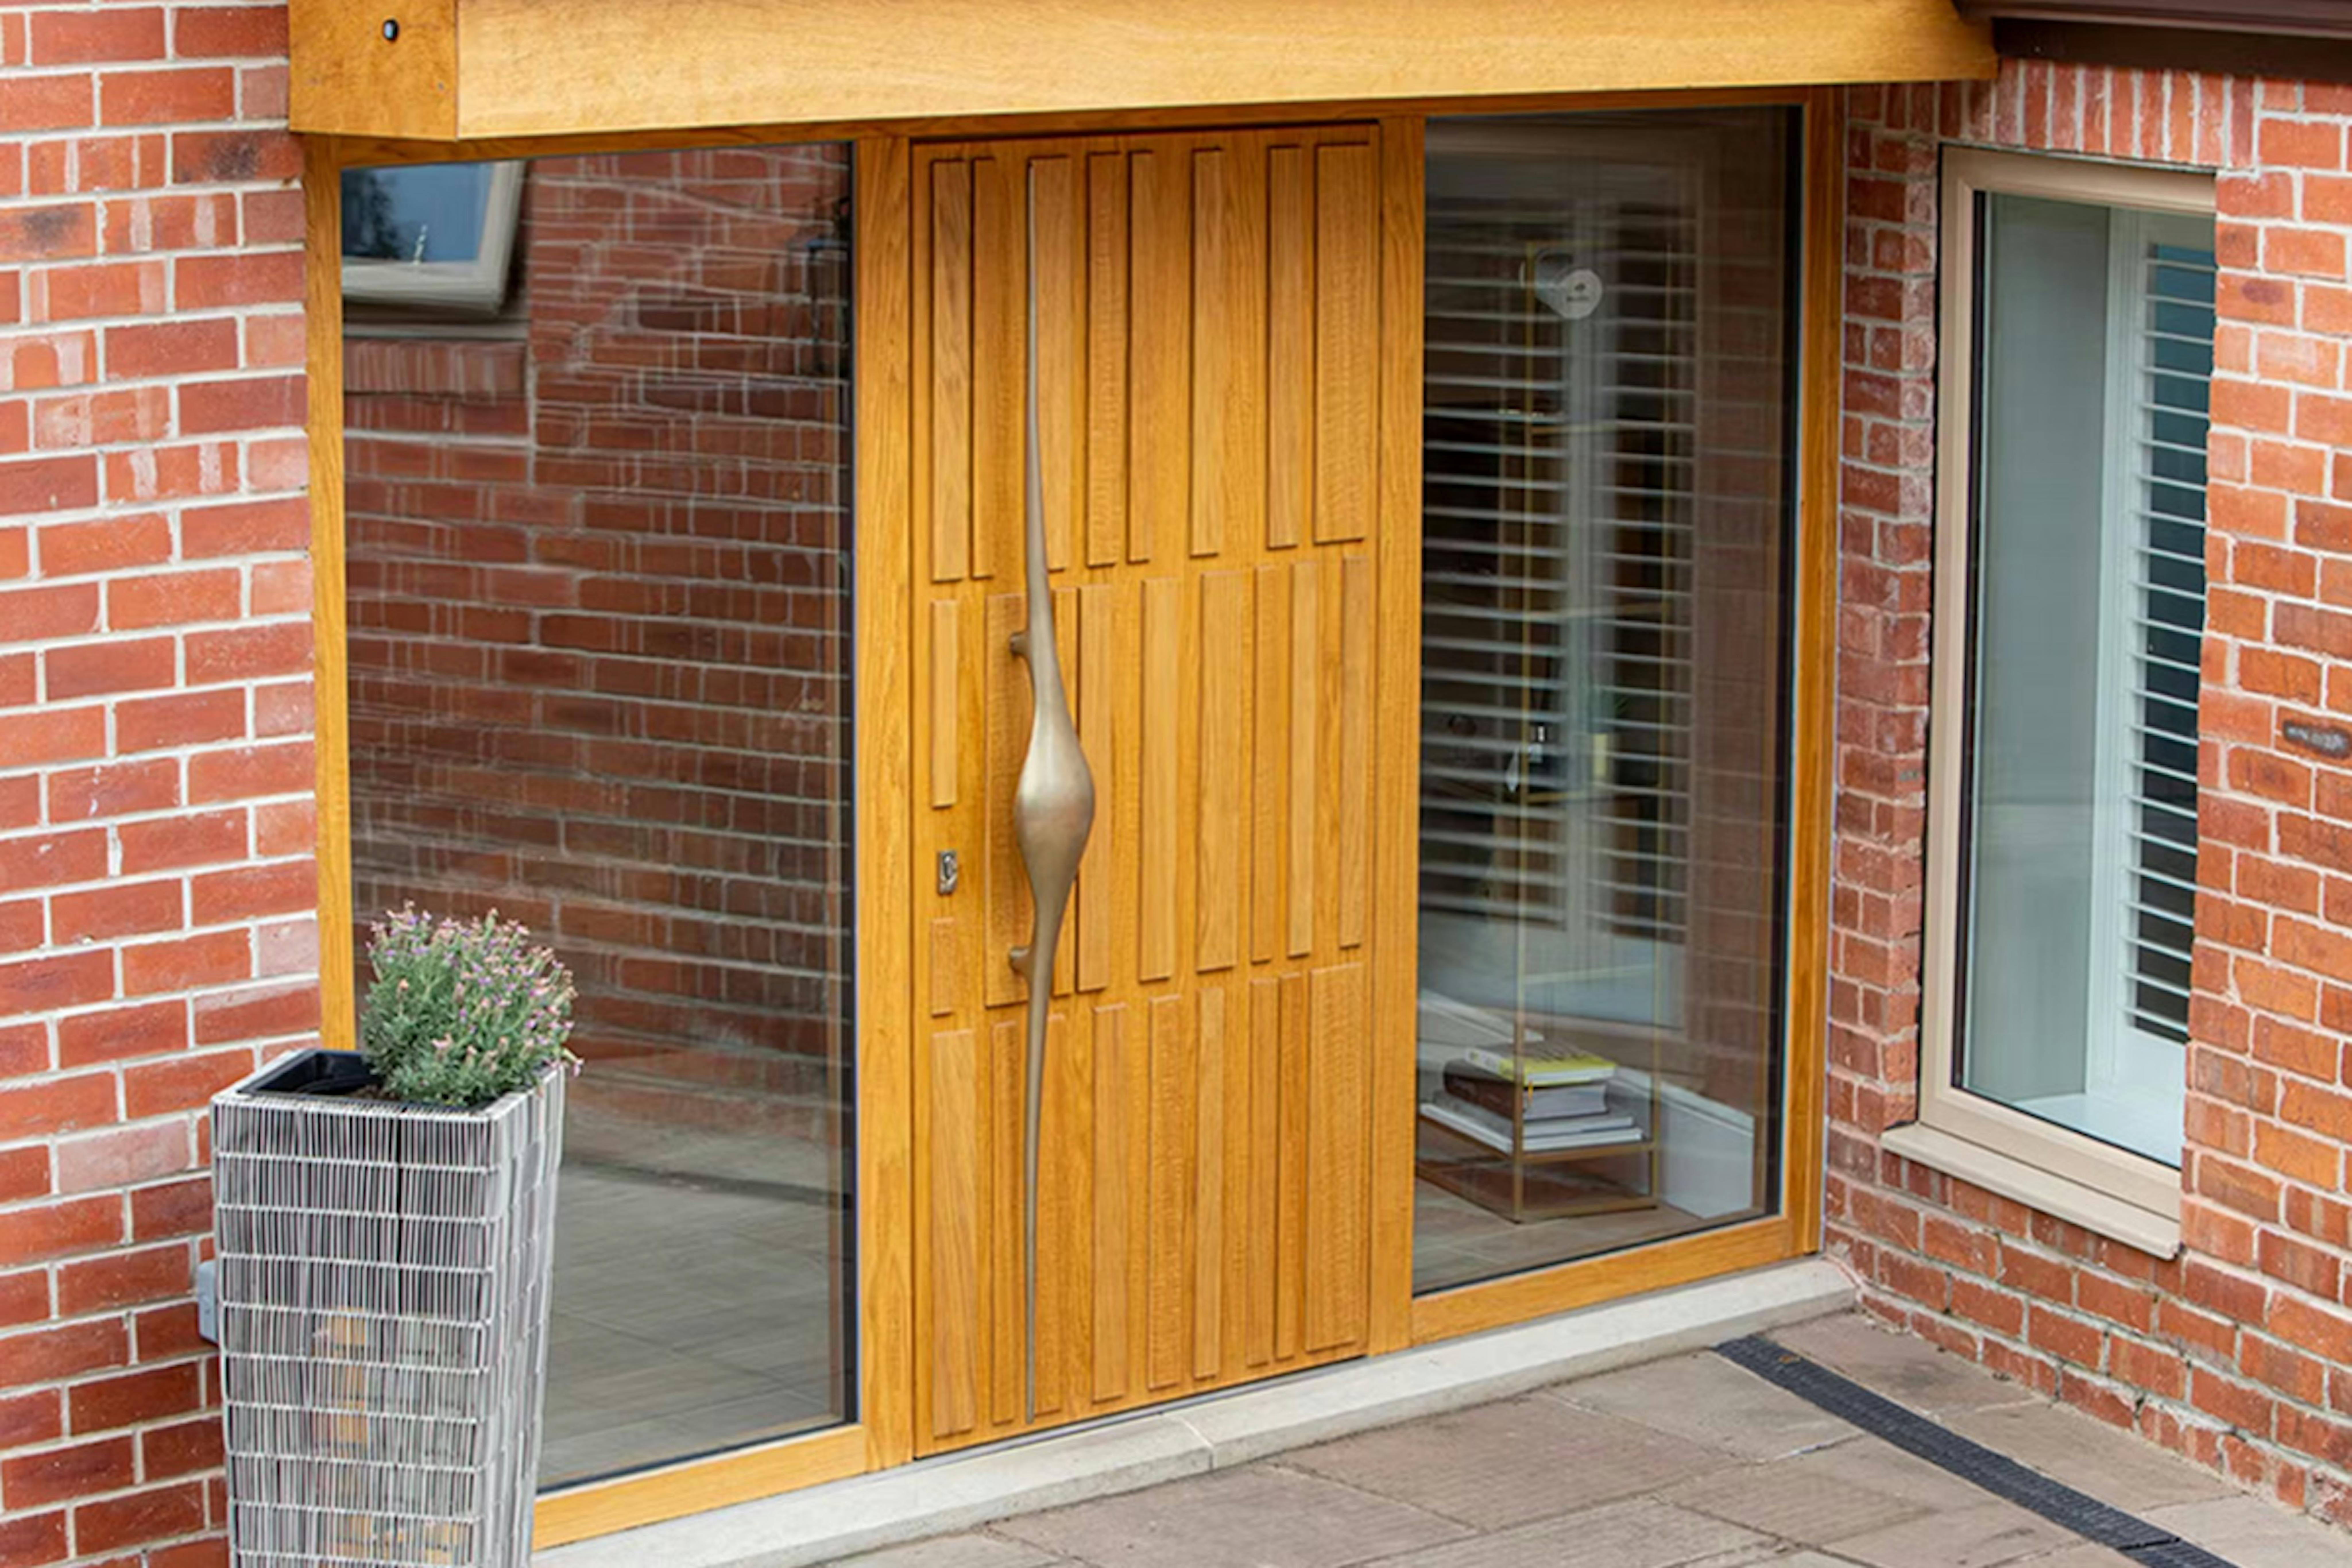 A bespoke Deuren front door design with irregular linear detail across three rows - Tavole, Honey Oak with long sculptural handle.